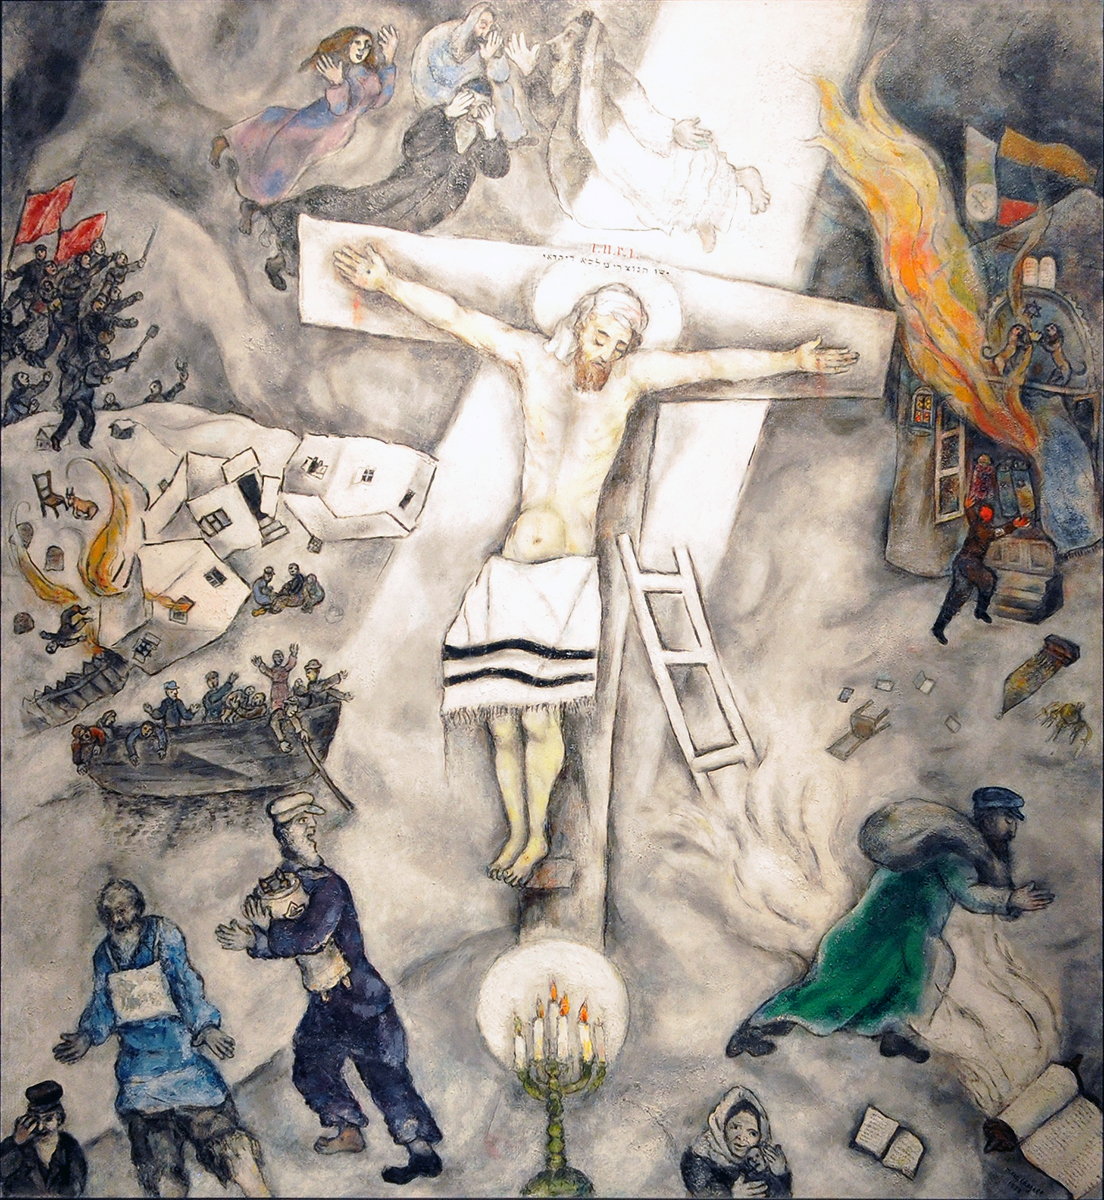 Marc+Chagall-1887-1985 (355).jpg